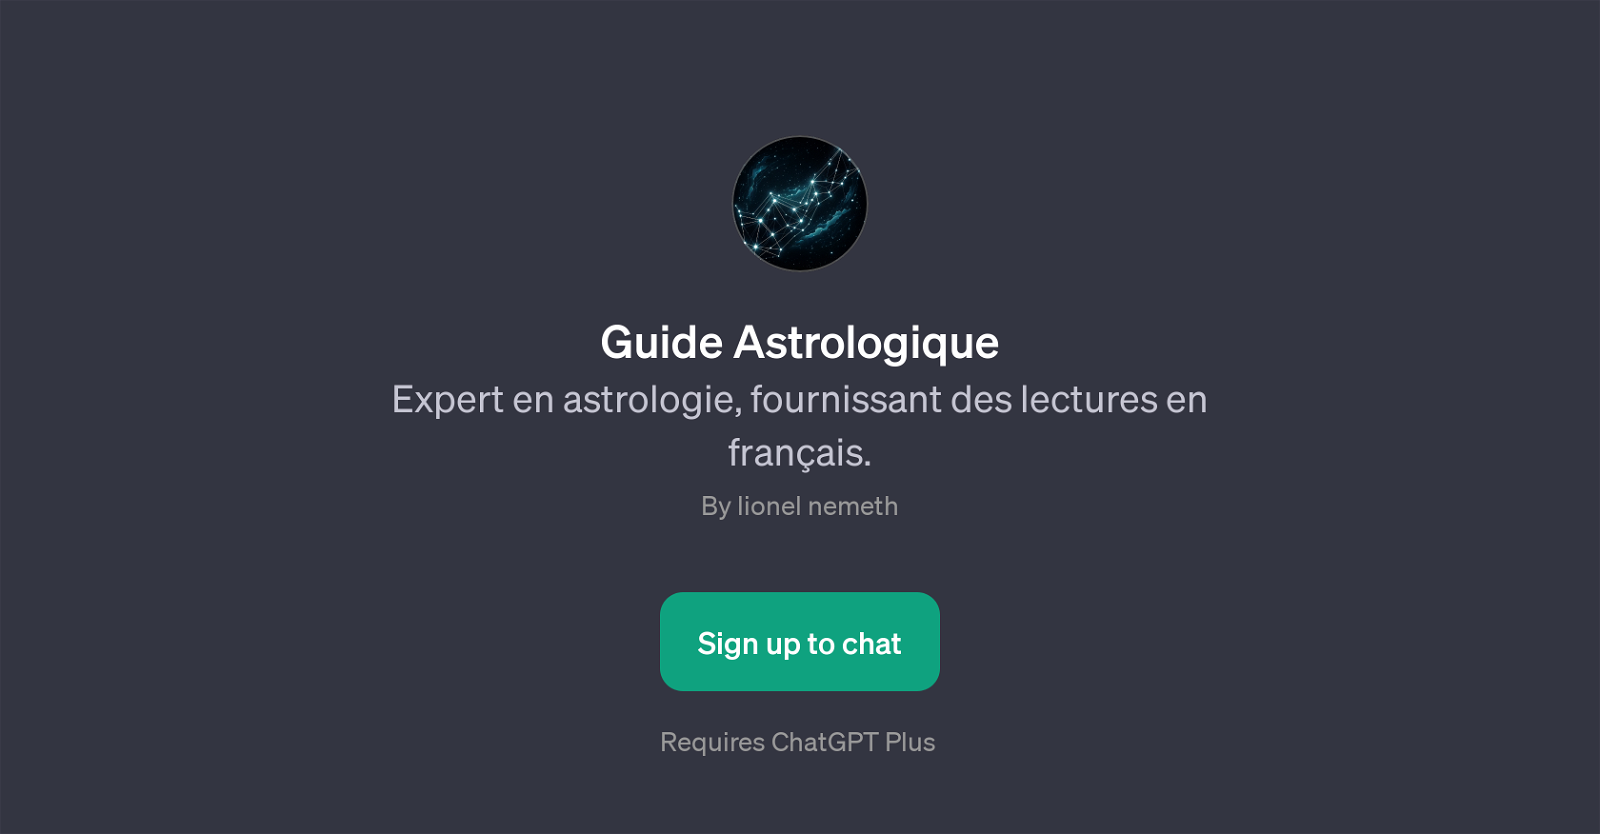 Guide Astrologique website